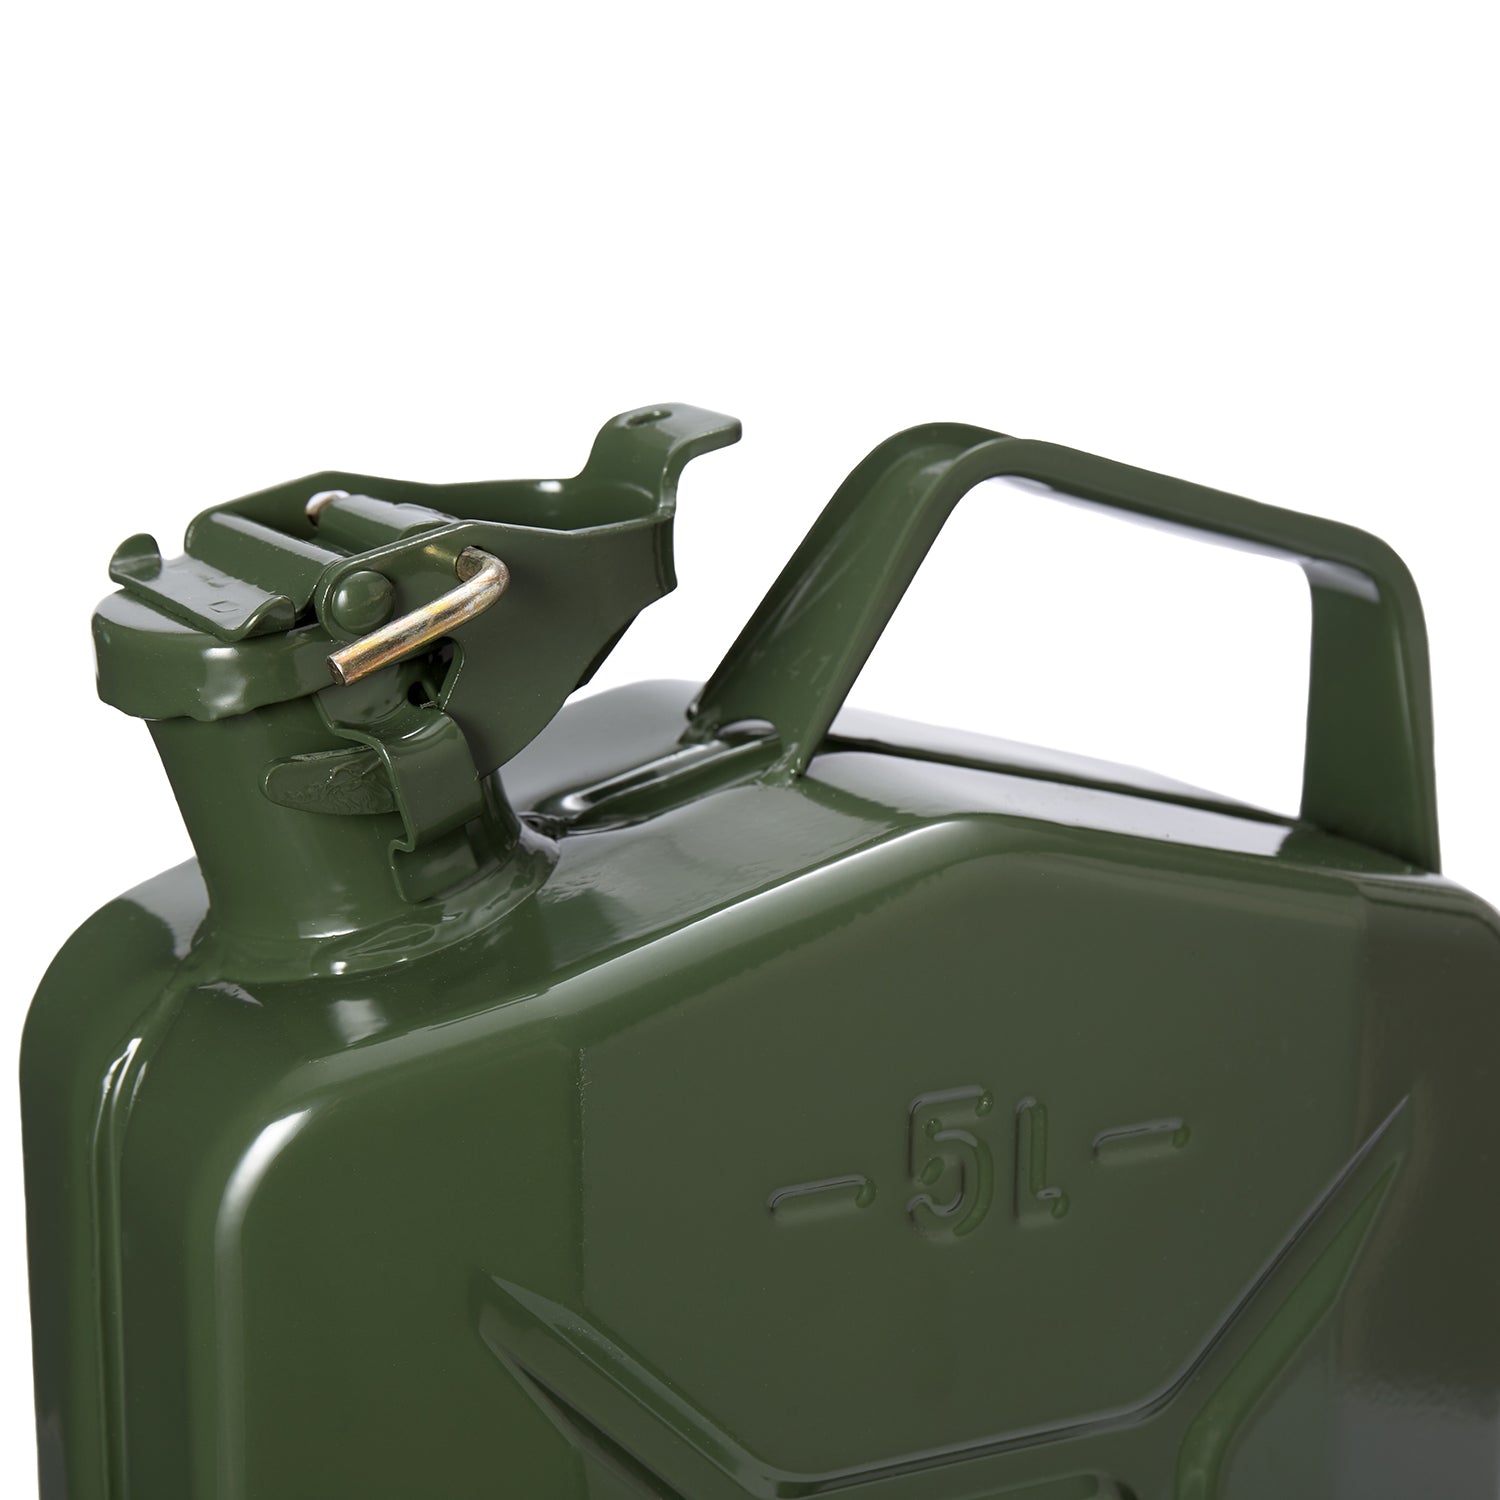 Metall Benzinkanister Kraftstoffkanister olivgrün 5 Liter - 2 Stück